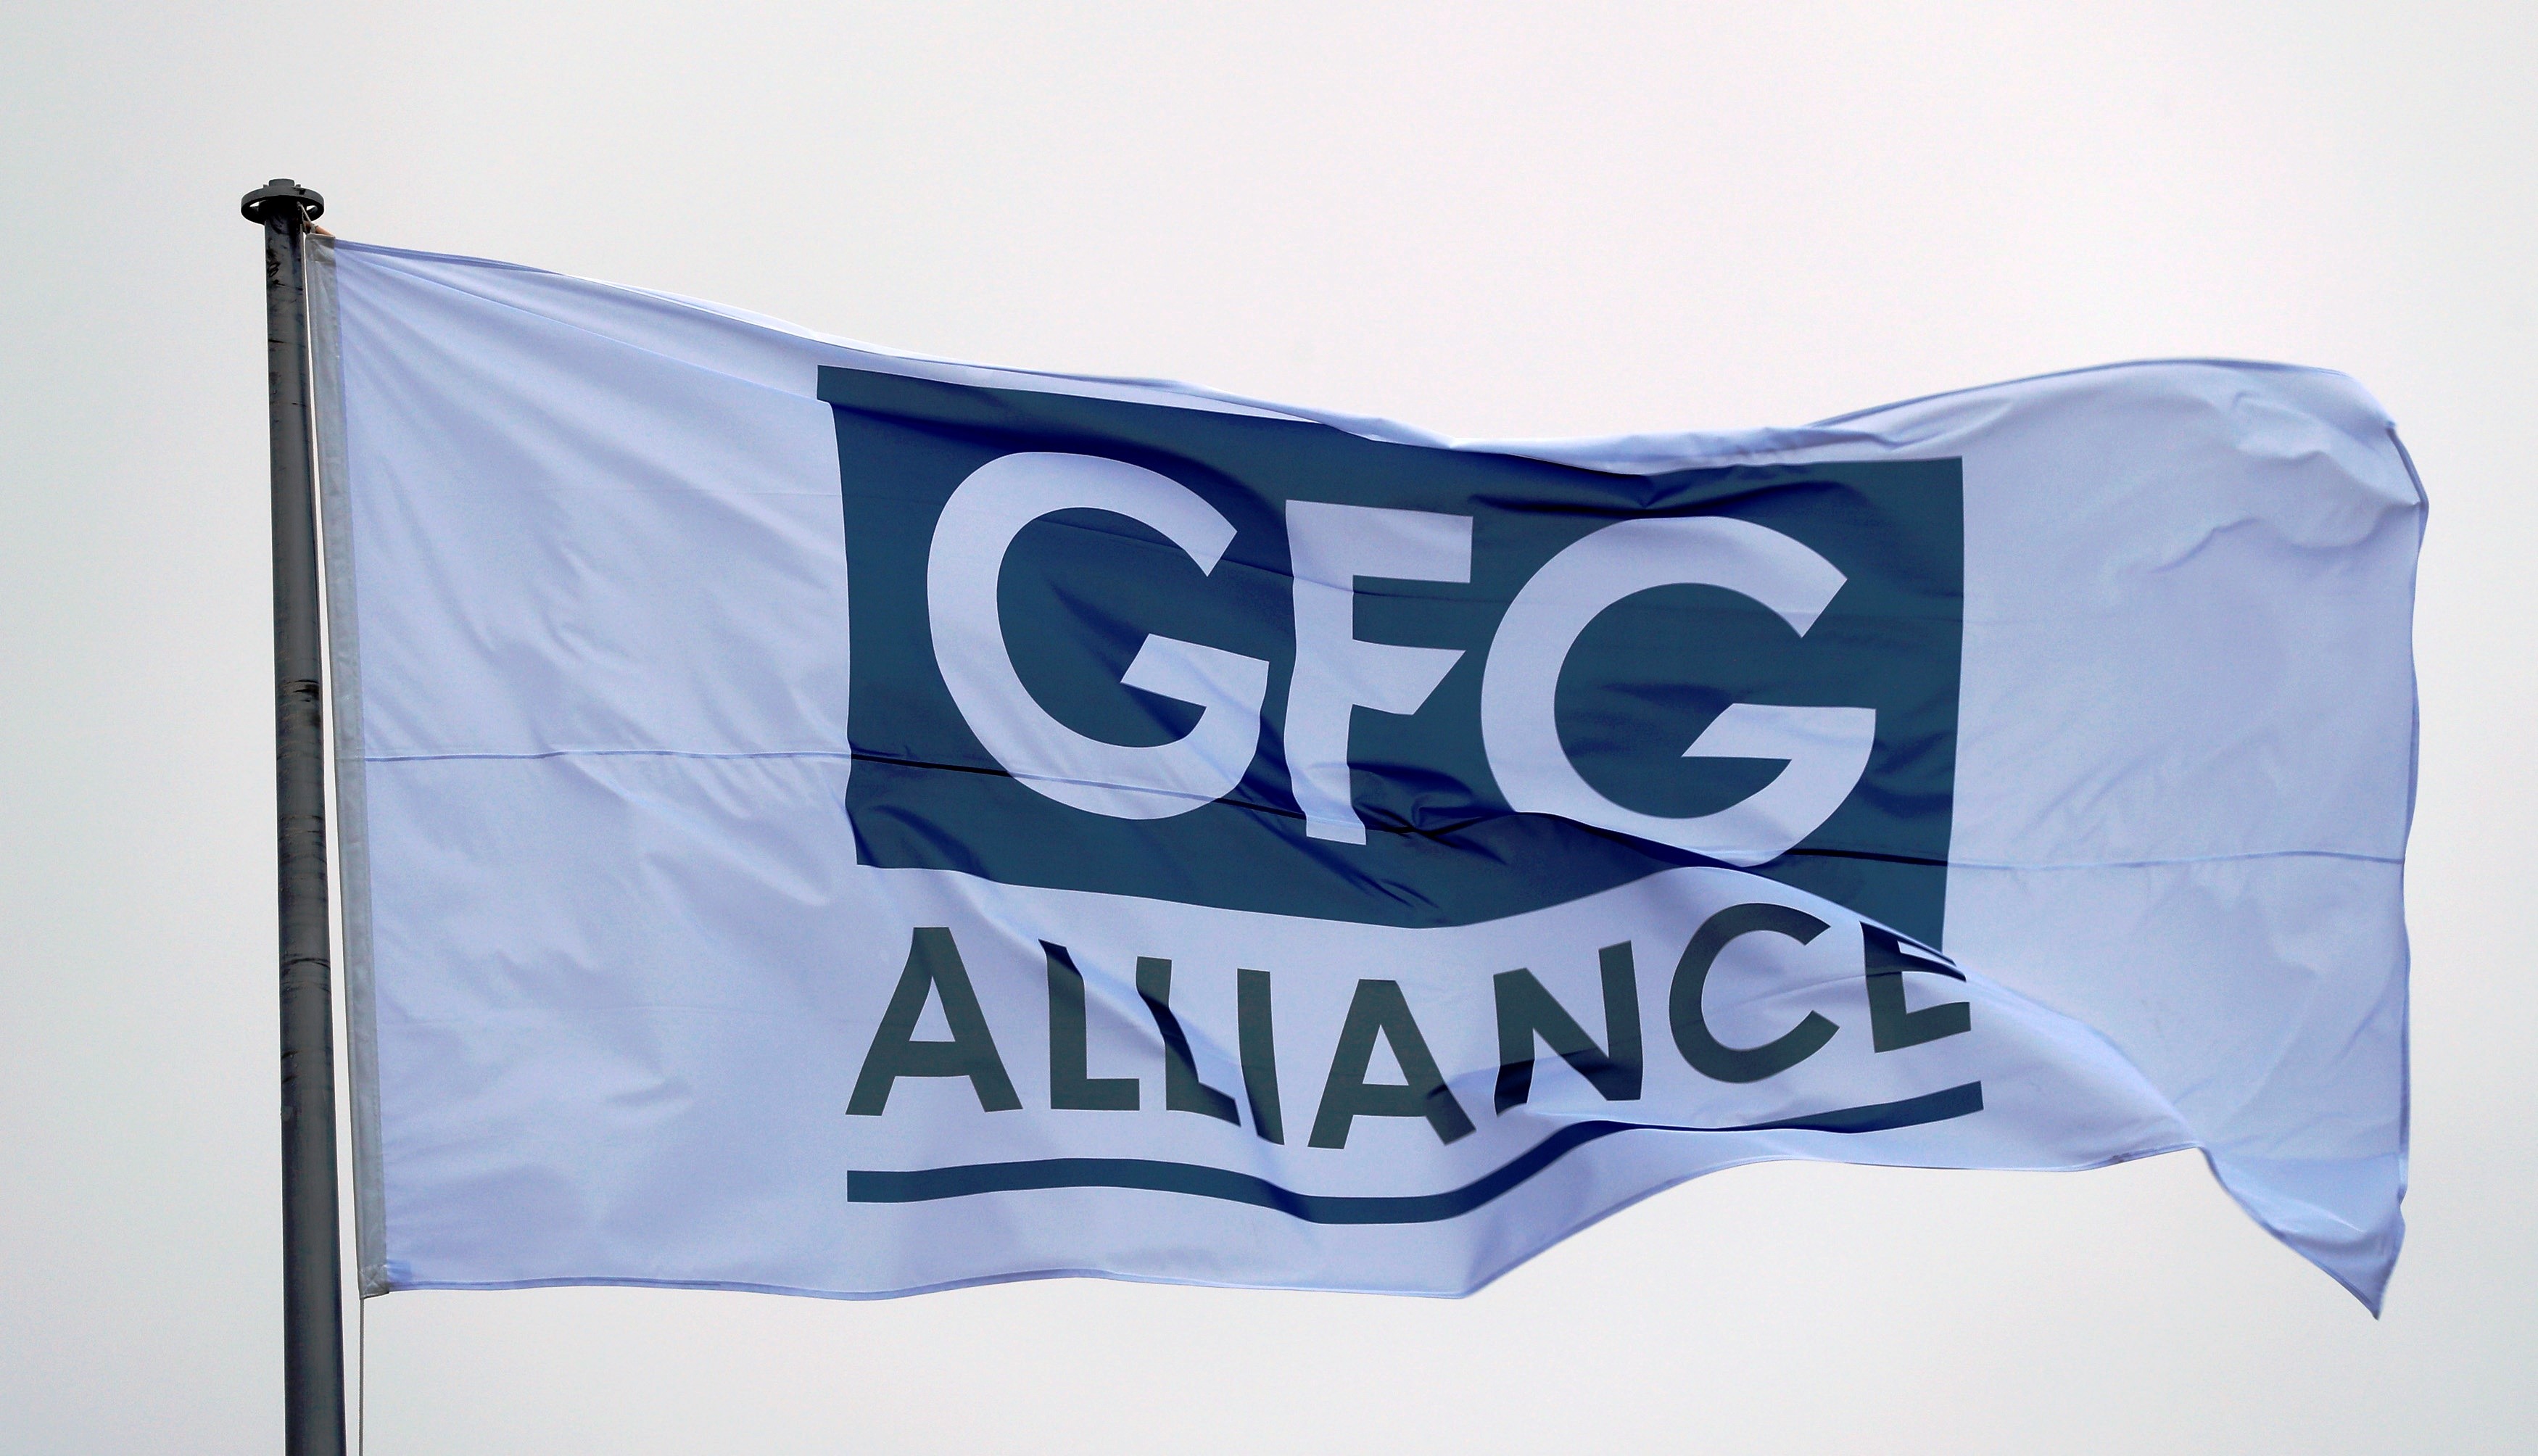 GFG Alliance's £586 million deal demands transparency 